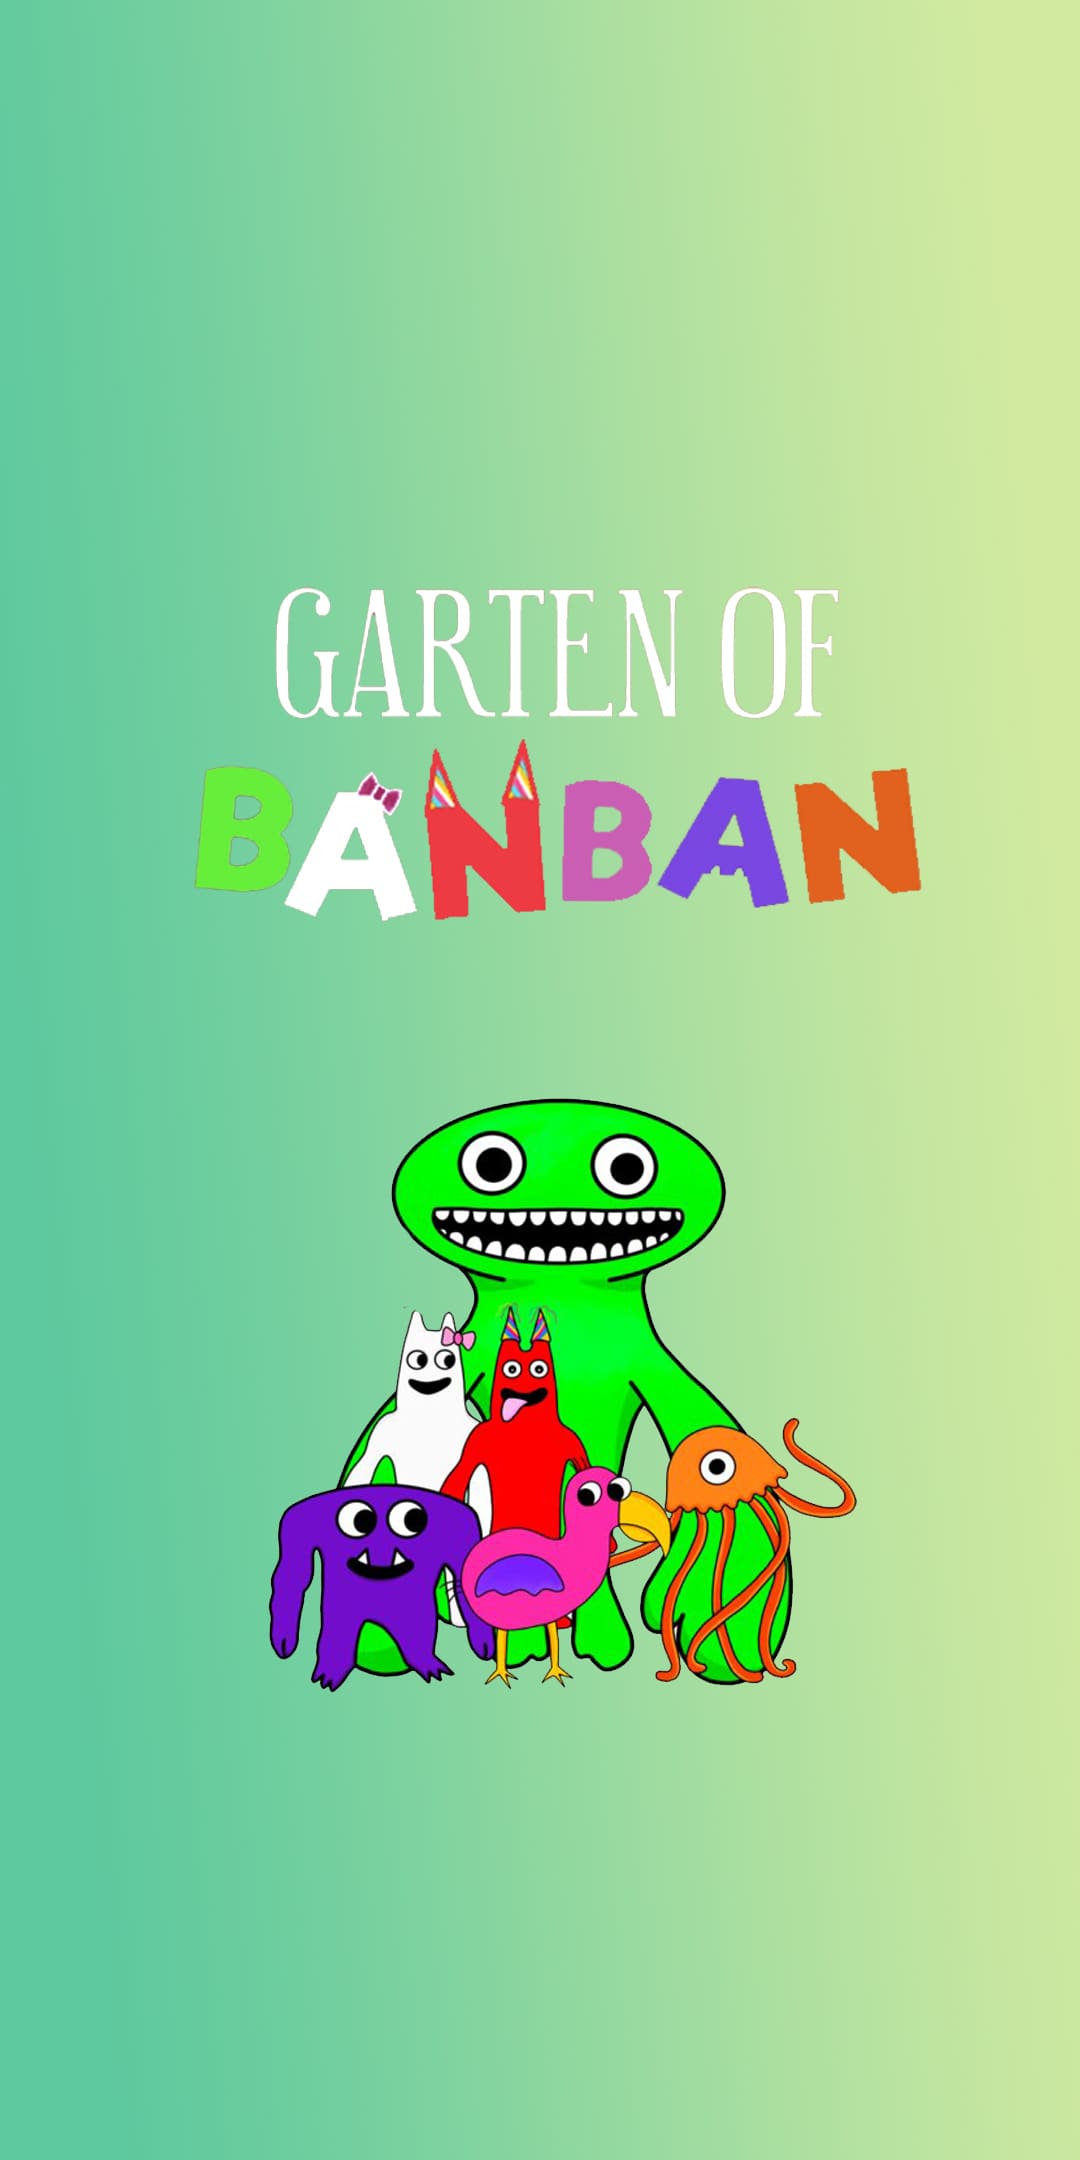 Garten Of Banban Wallpapers - Wallpaper Cave